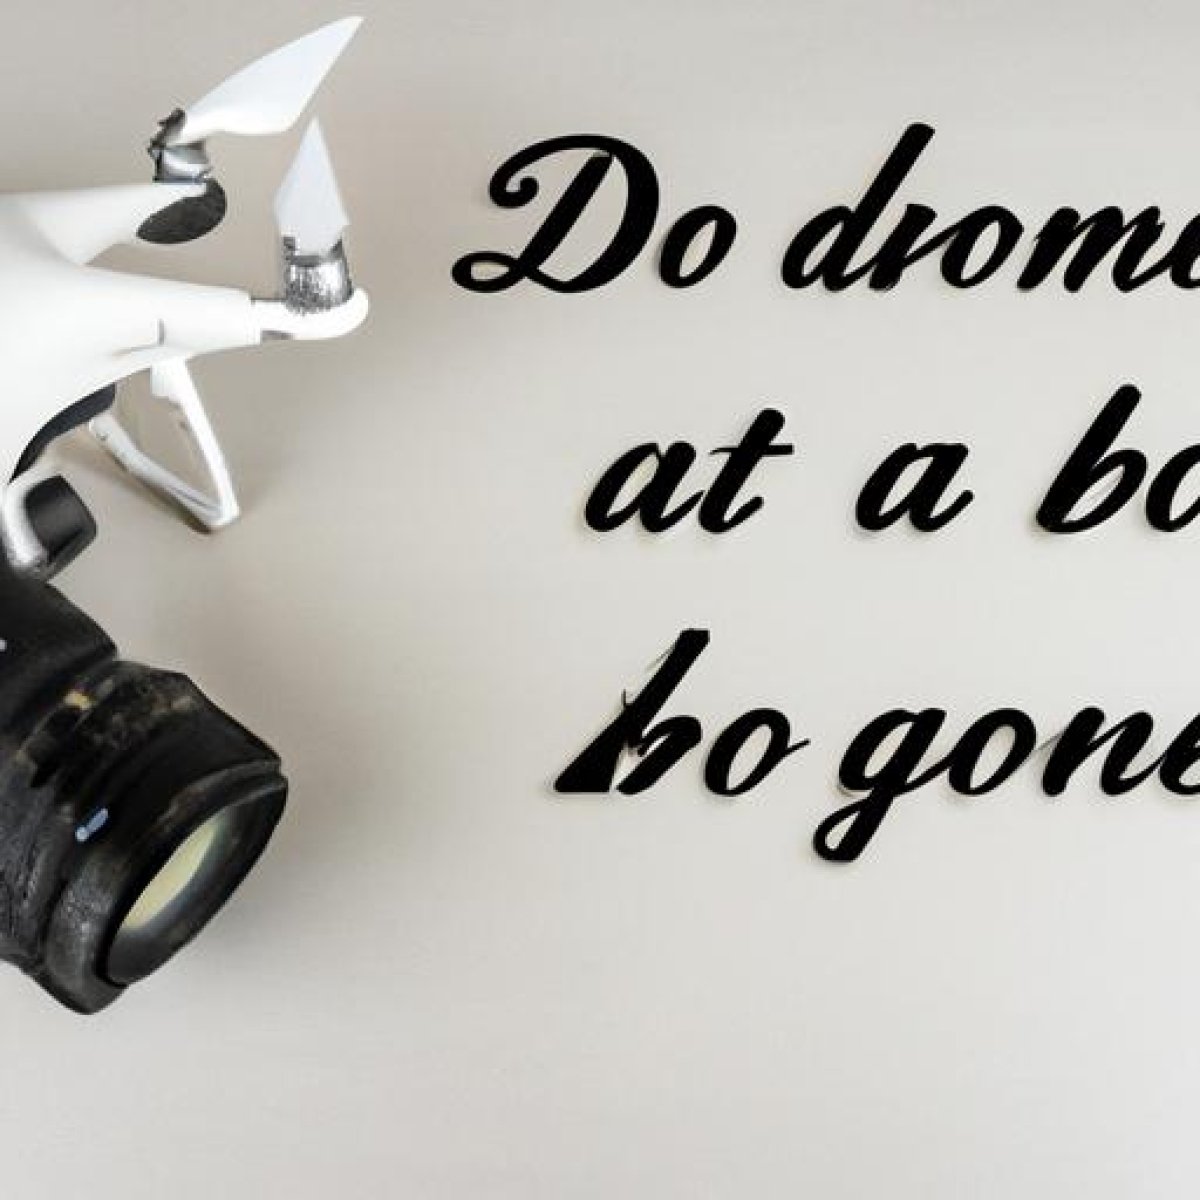 Comprar un drone con cámara